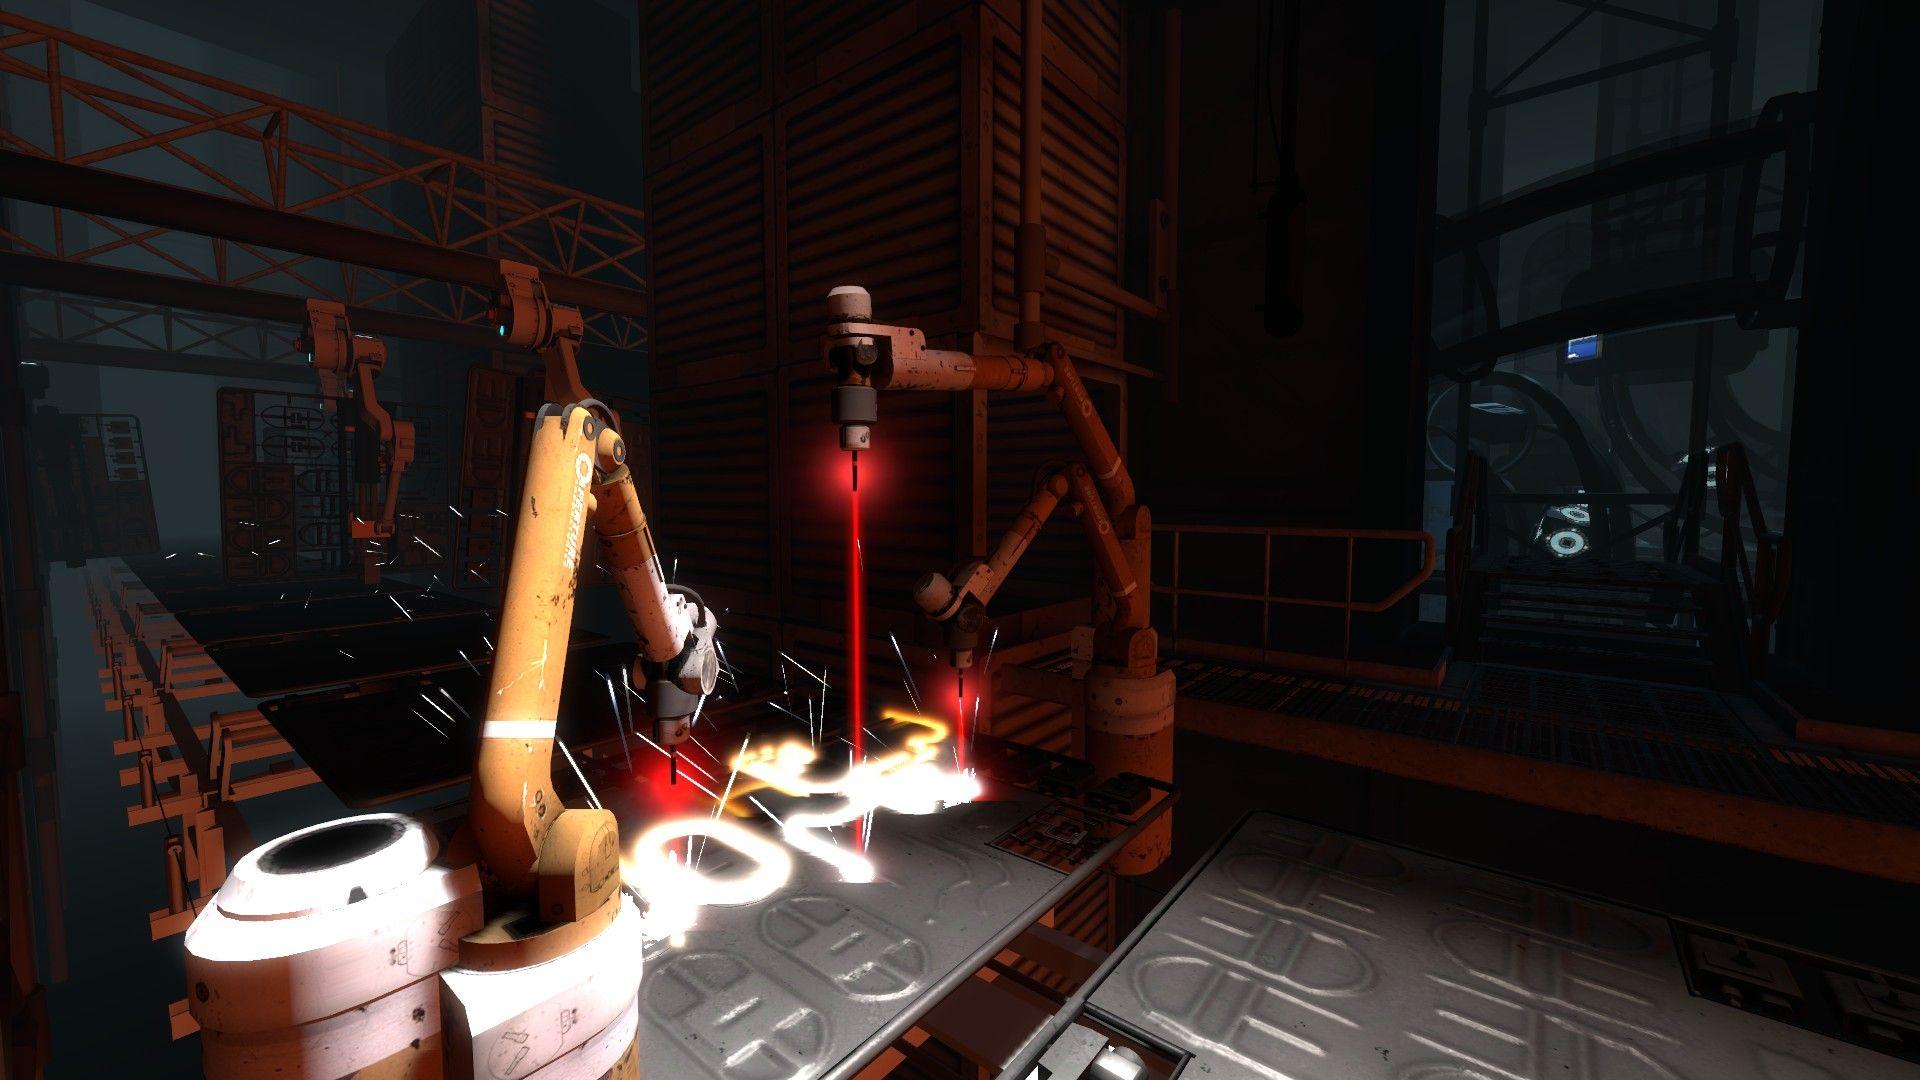 Screenshot №9 from game Portal 2